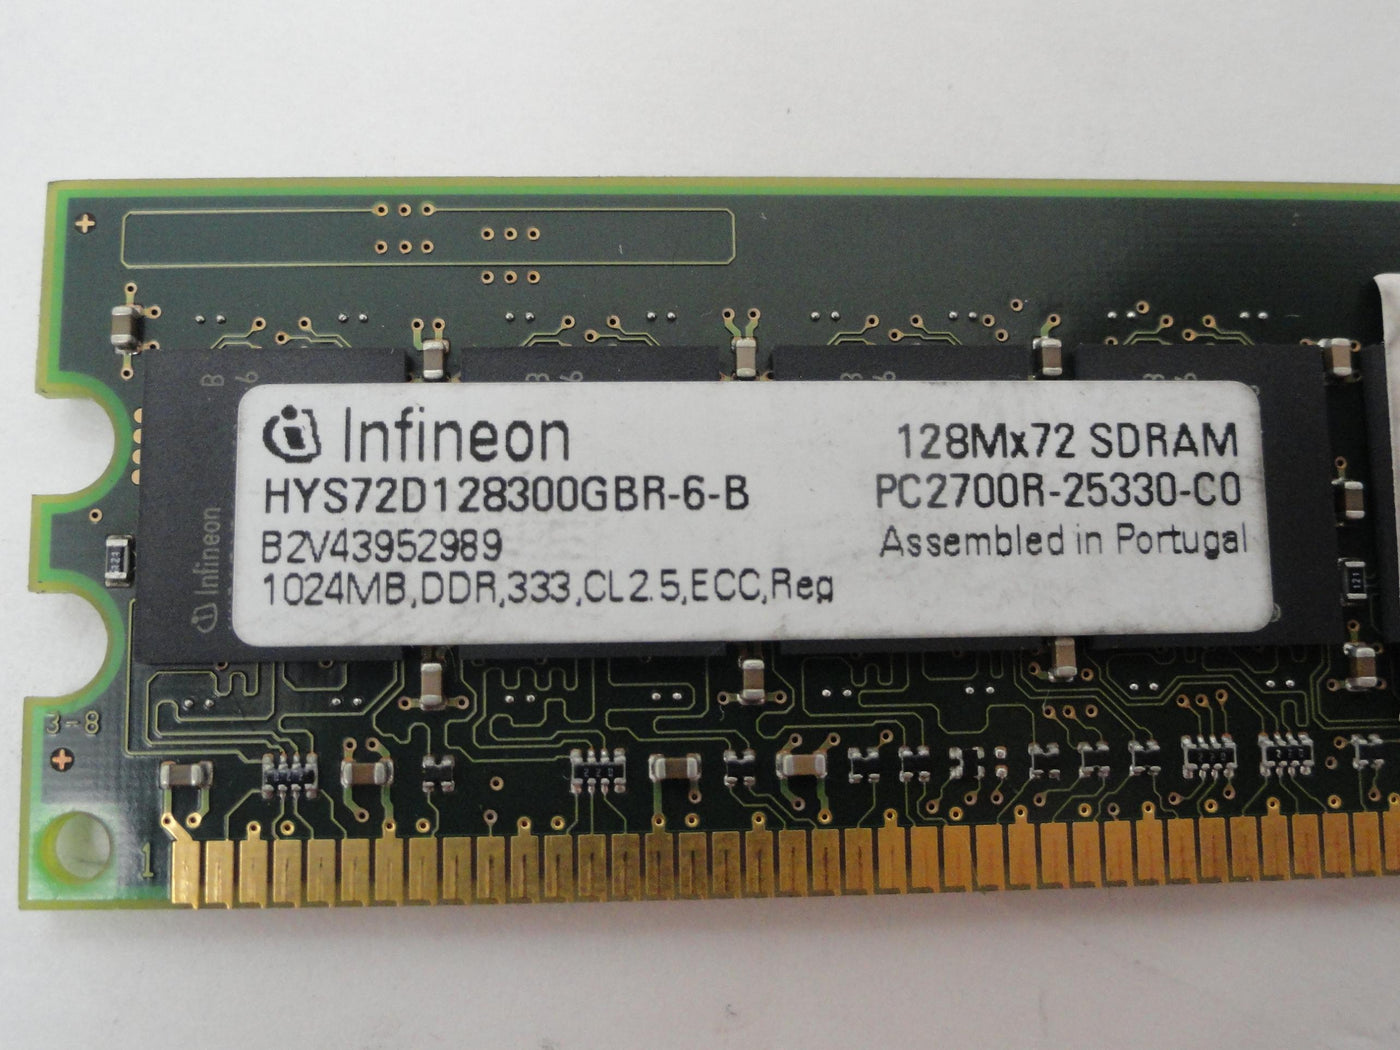 PC2700R-25330-C0 - HP/Infineon 1GB HP PC2700 DIMM 333Mhz DDR 333 CL2.5 ECC Reg - Refurbished